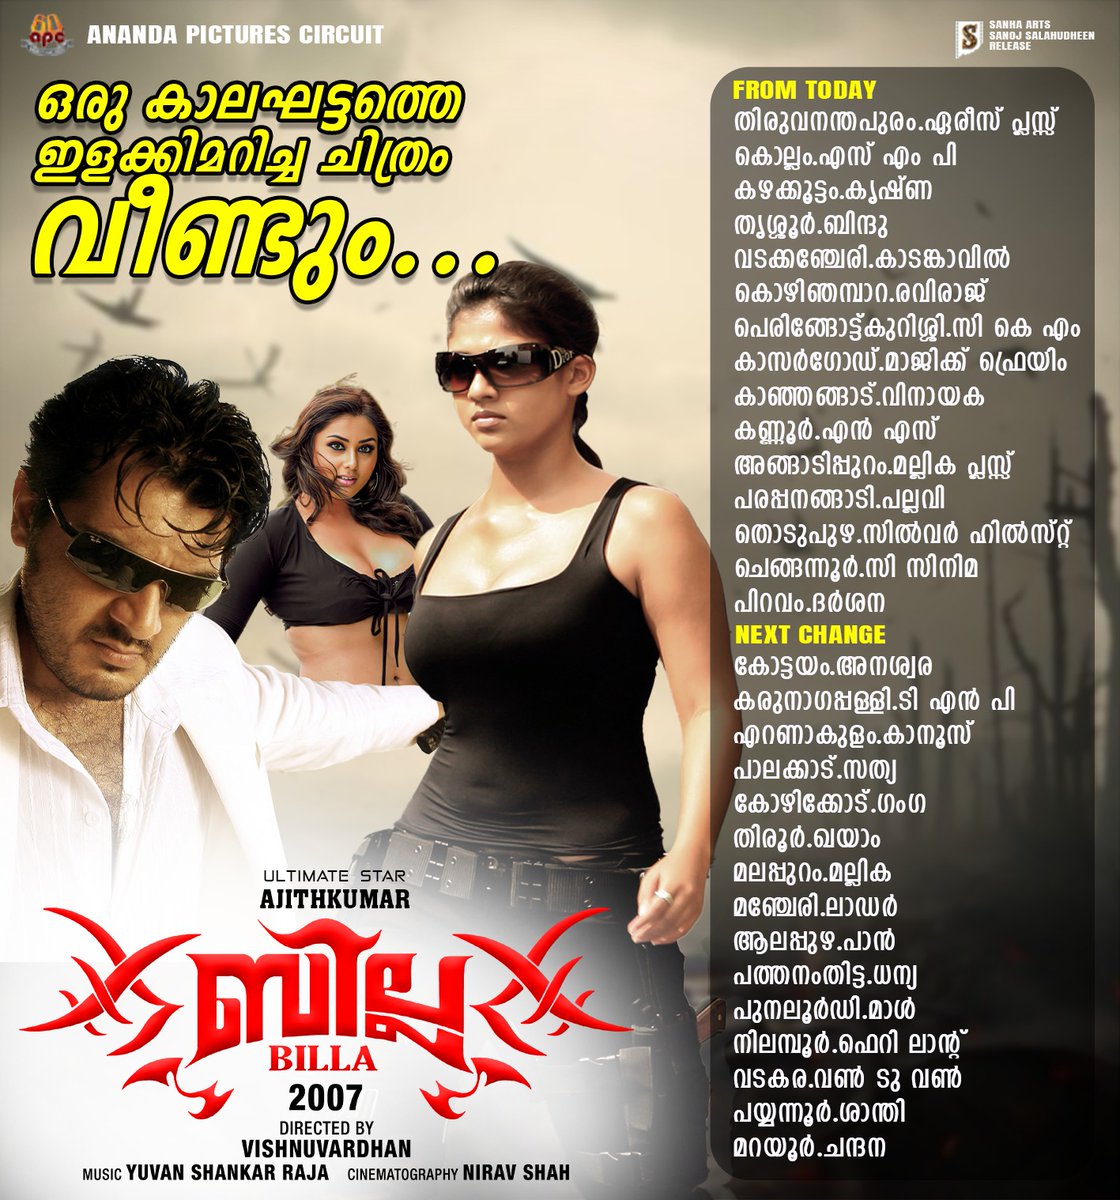 #Billa Re-release Kerala Theatre List From Tomorrow